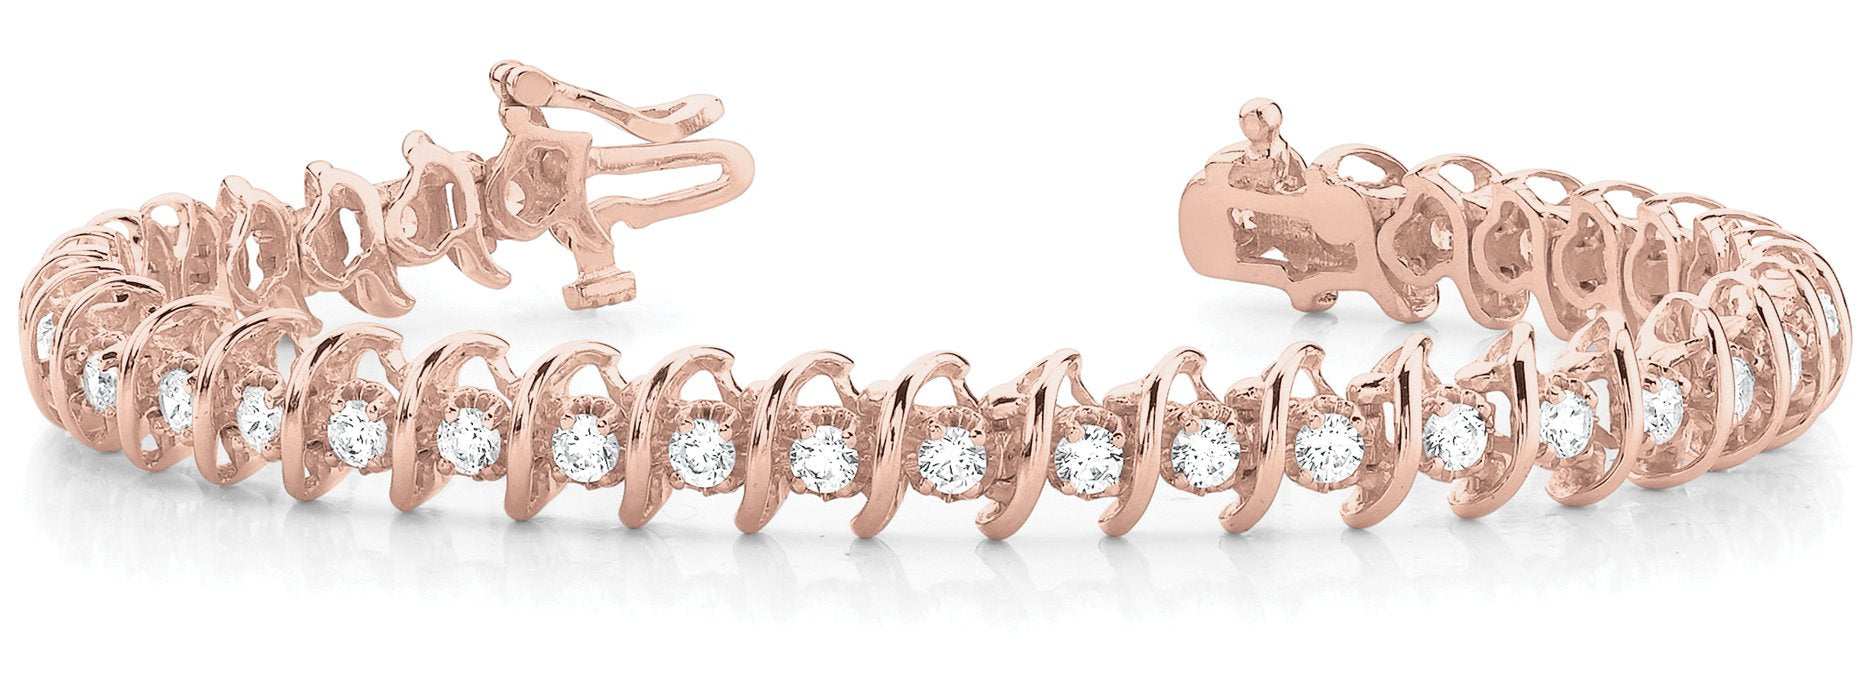 Fancy Diamond Bracelet Ladies 1.91ct tw - 14kt Rose Gold